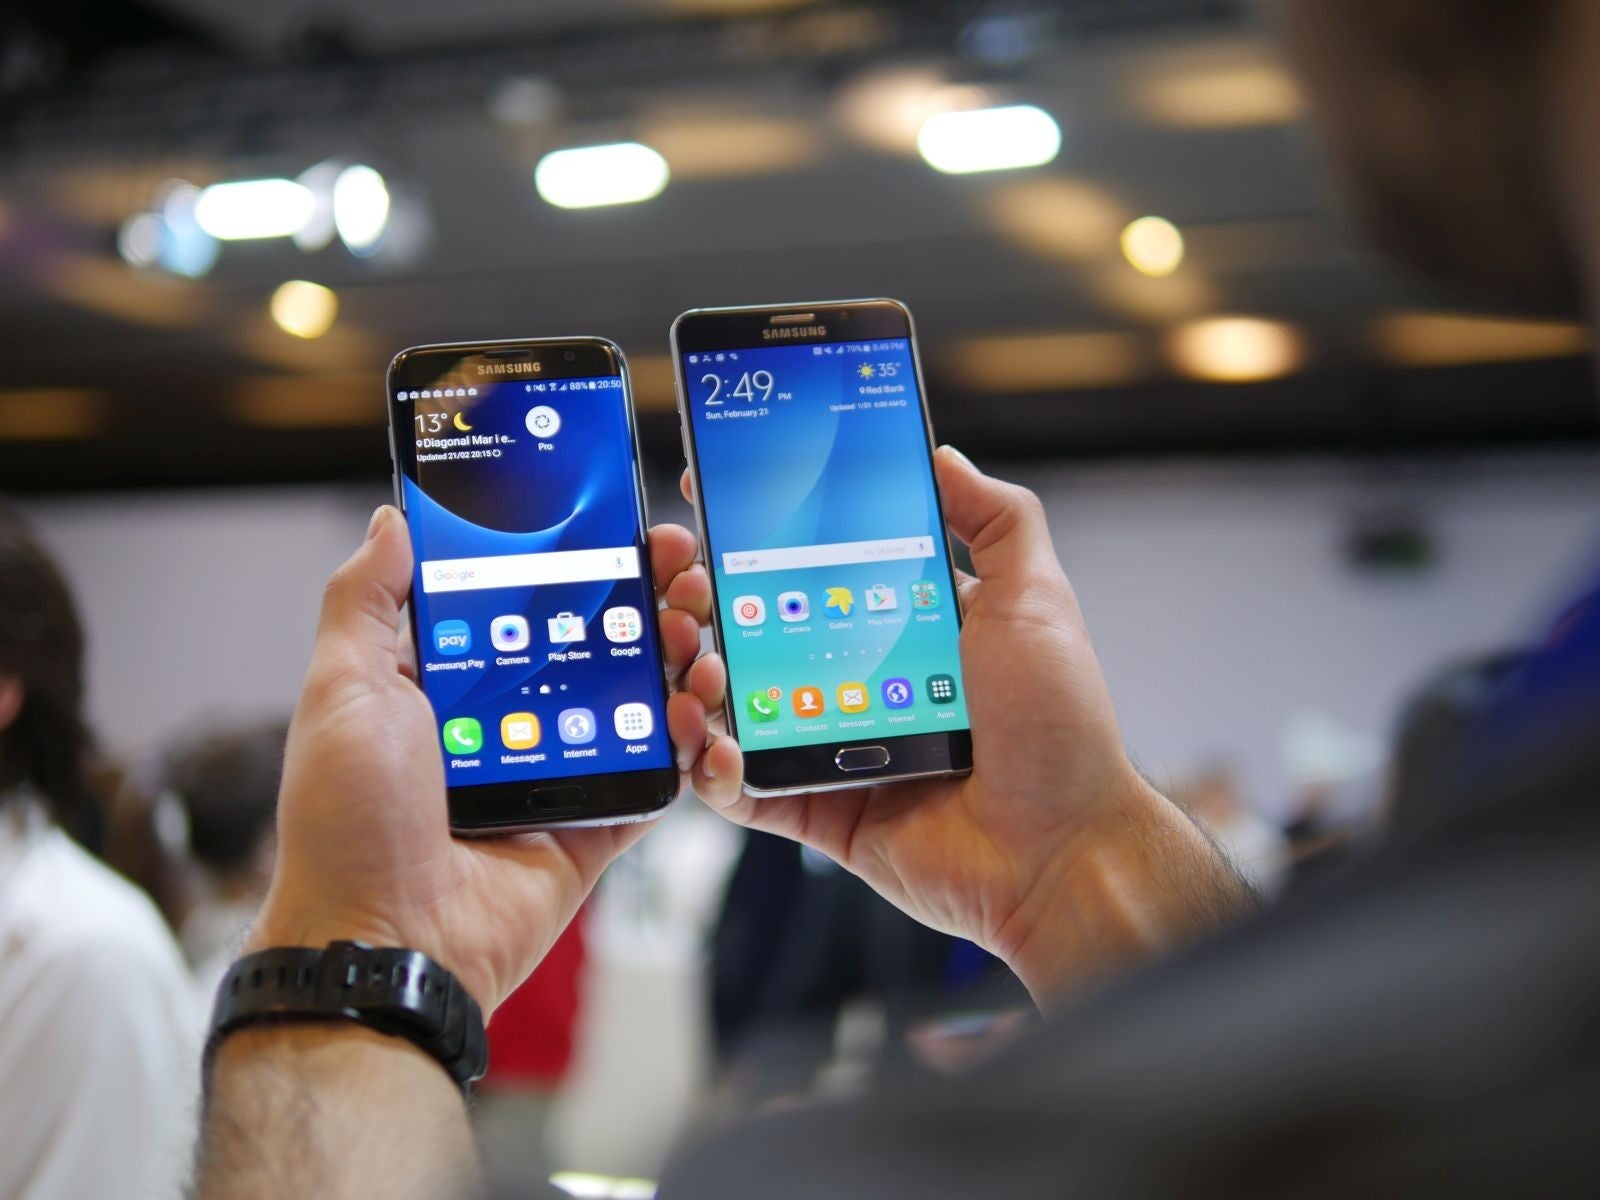 Samsung Galaxy S7 edge vs Samsung Galaxy Note 5: first look